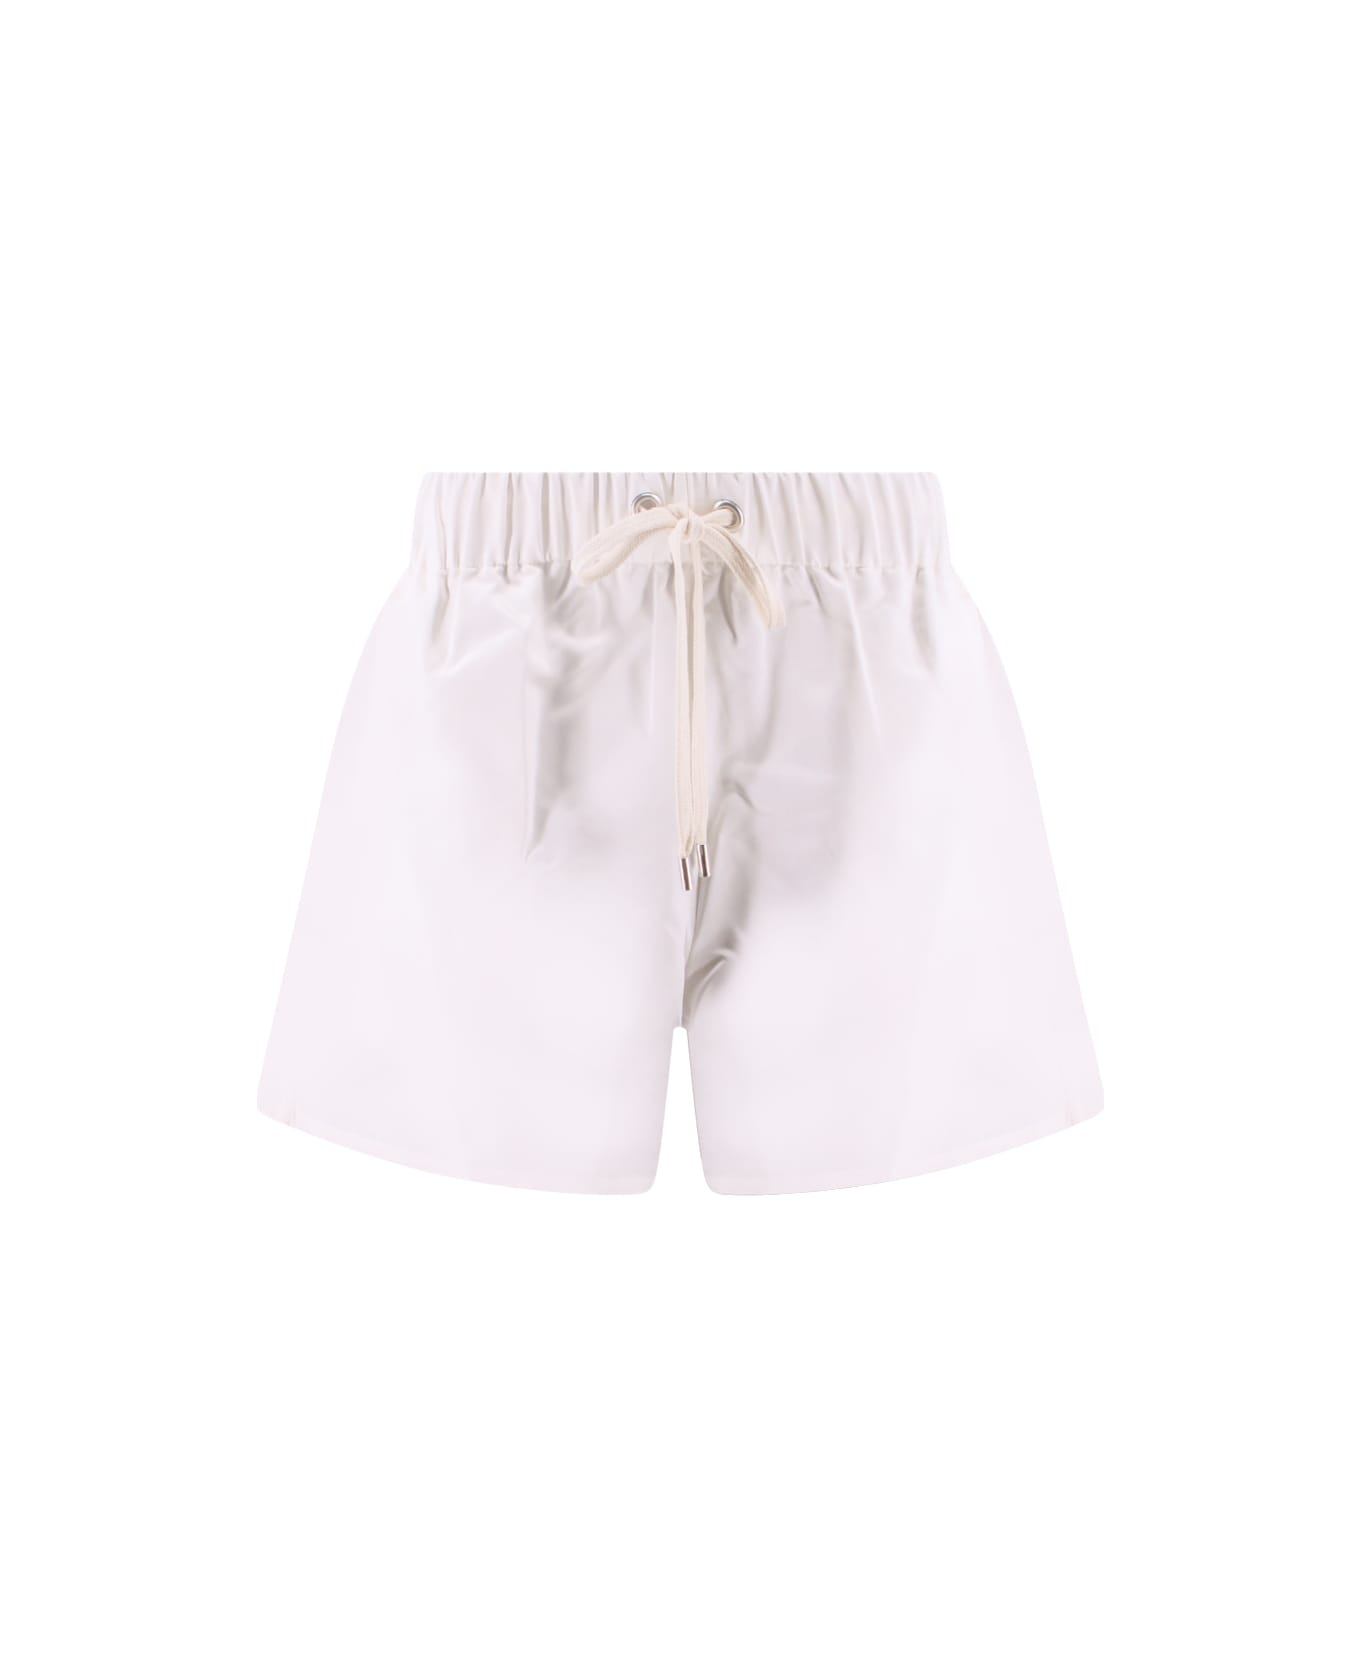 Sa Su Phi Shorts - White ショートパンツ